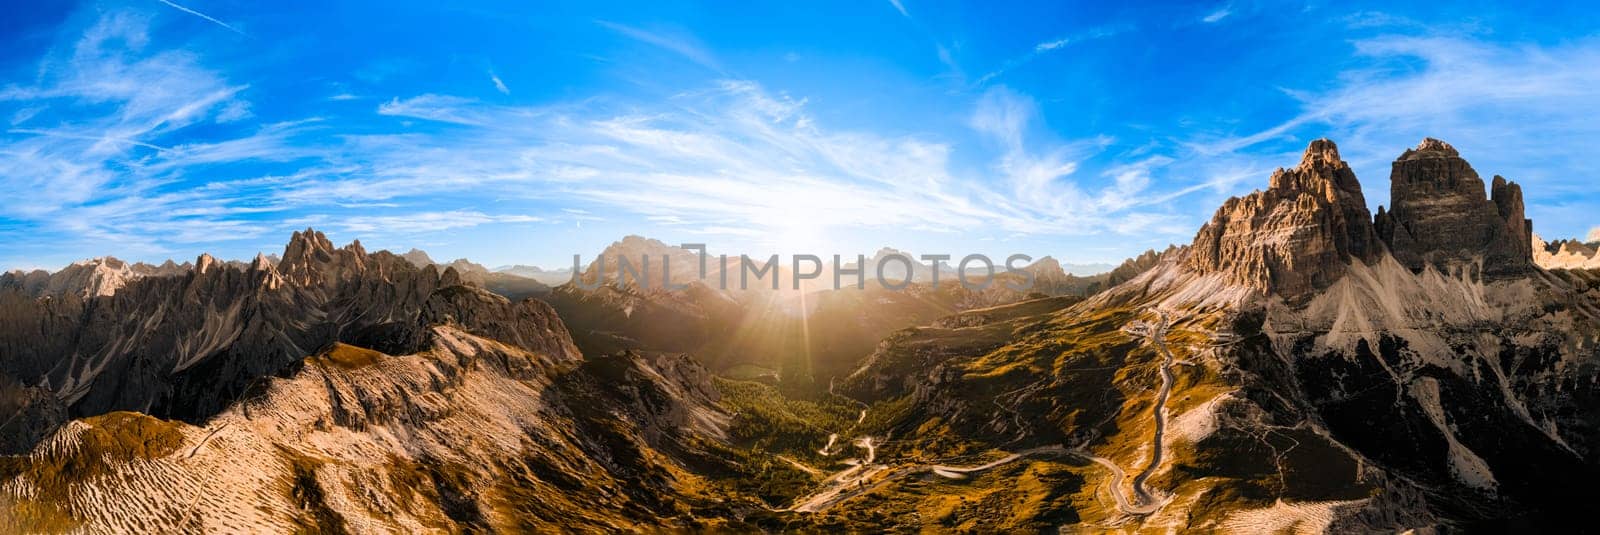 Mountain landscape of Three Peaks of Lavaredo at sunset by vladimka